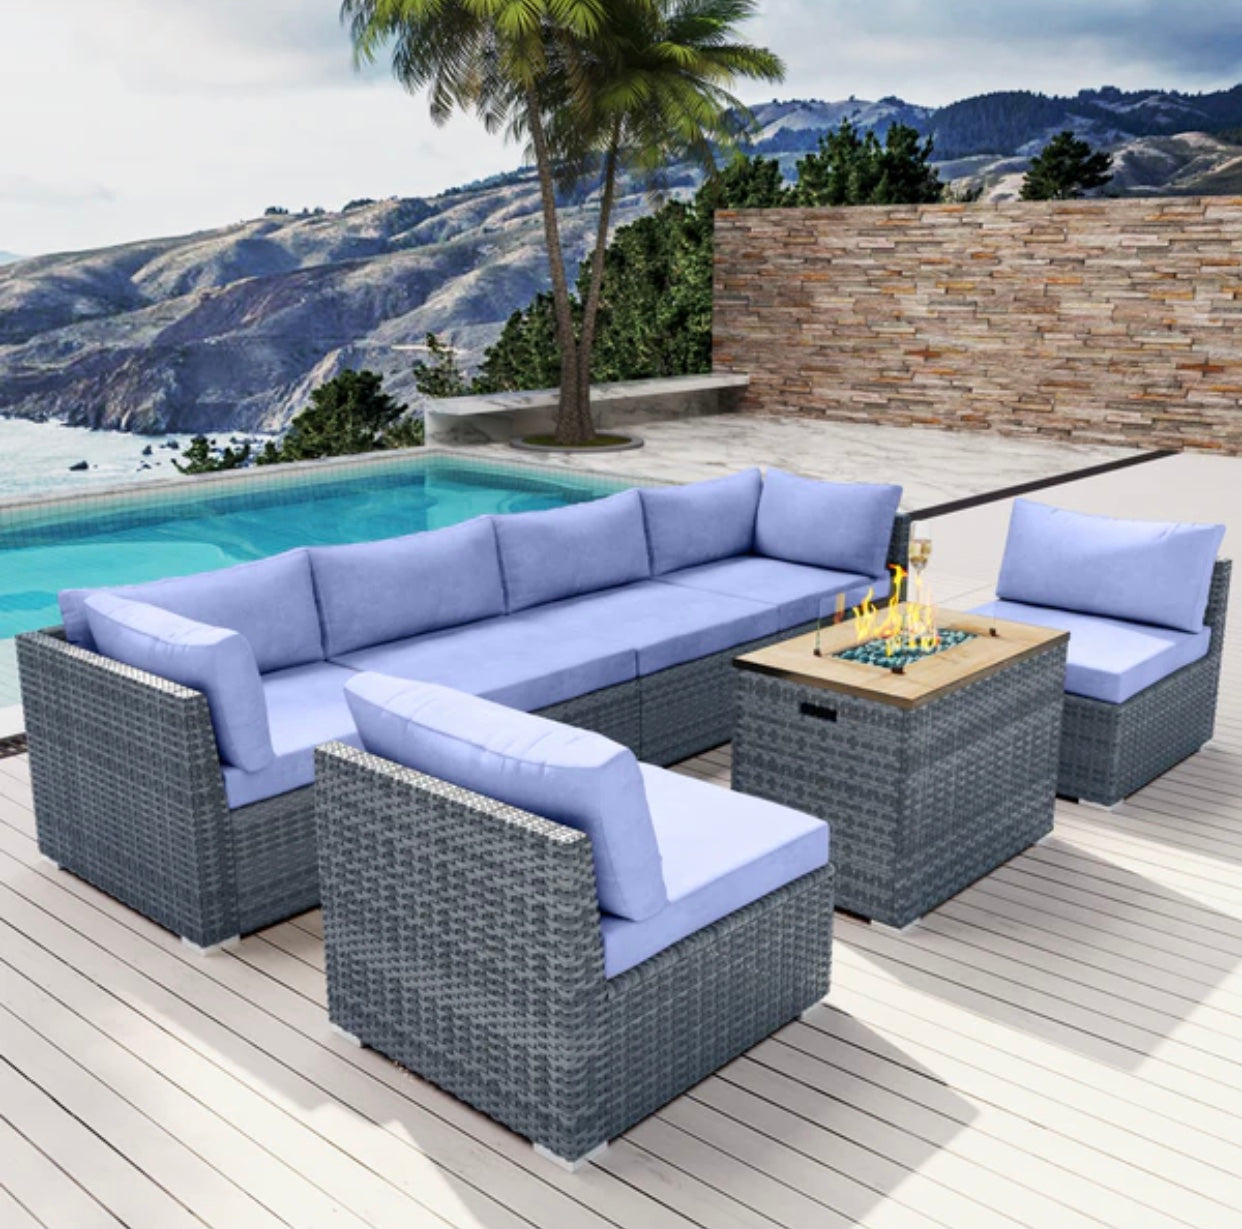 Lavender 7 Seven piece Outdoor Patio Furniture with Propane Fire Pit Gray Wicker Santa Monica Beach